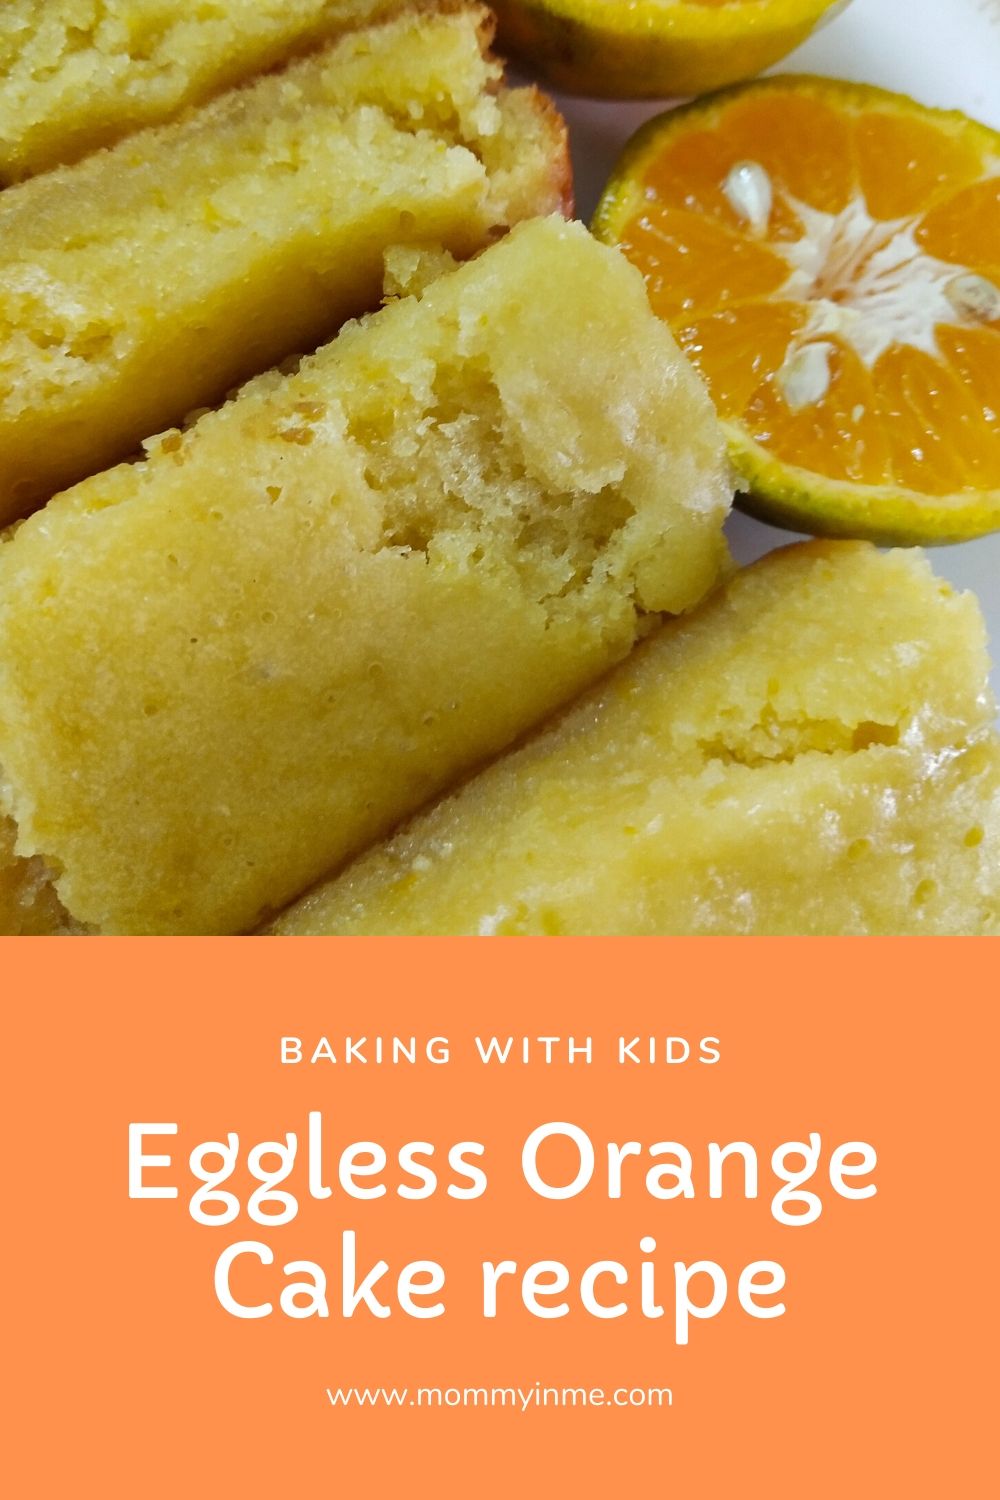 Delicious and Eggless Orange Cake Recipe which can also be used to make Orange Muffins #orangecake #baking #bakingwithkids #cakebake #orange